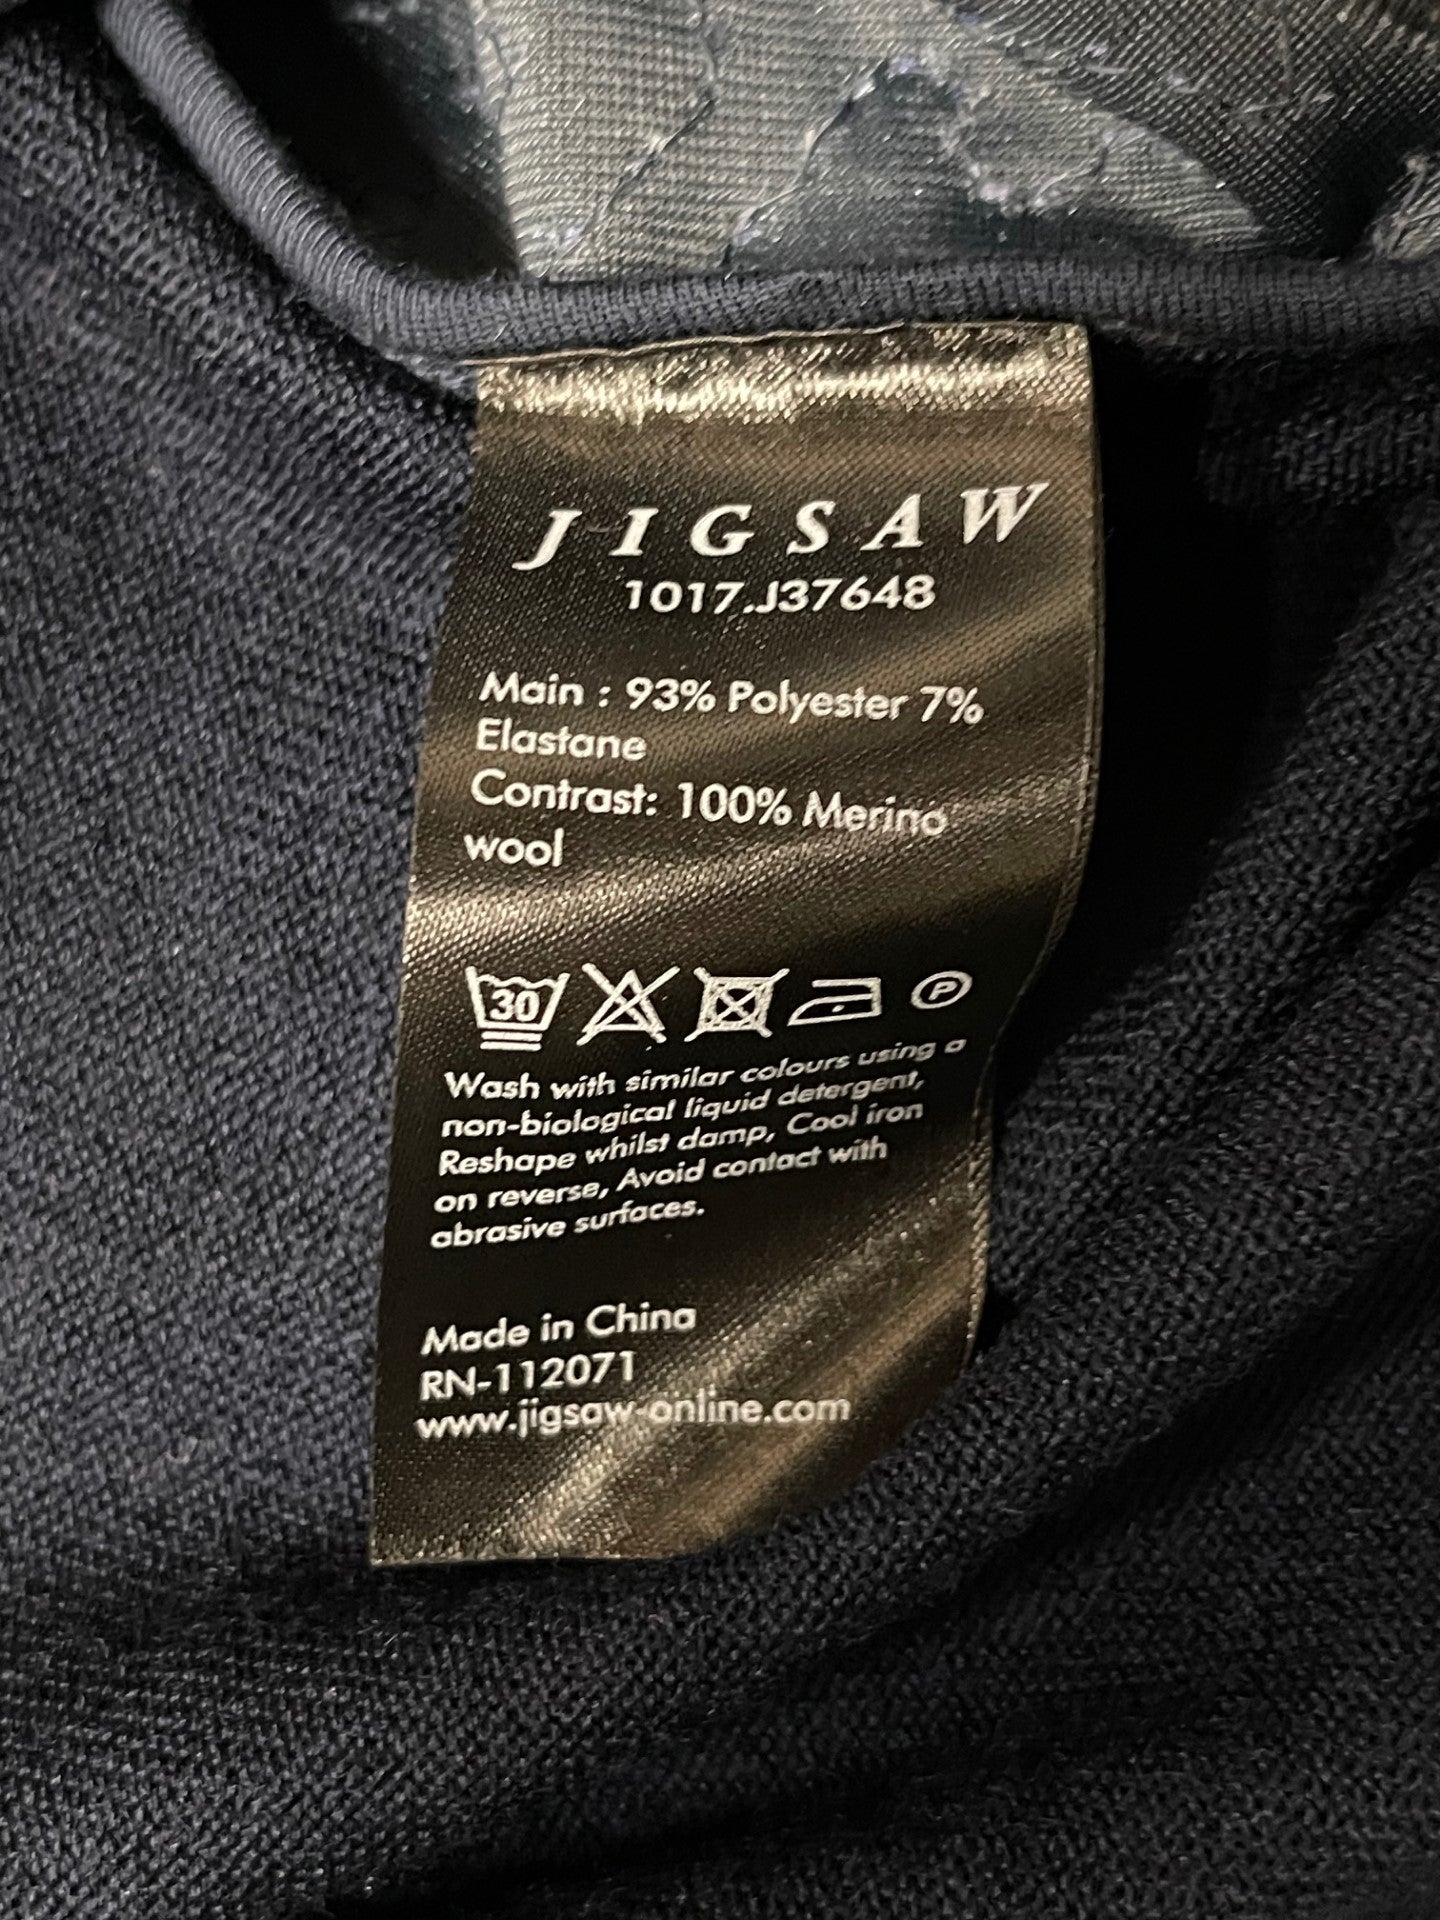 Jigsaw Blue Sequin Wool Top Small